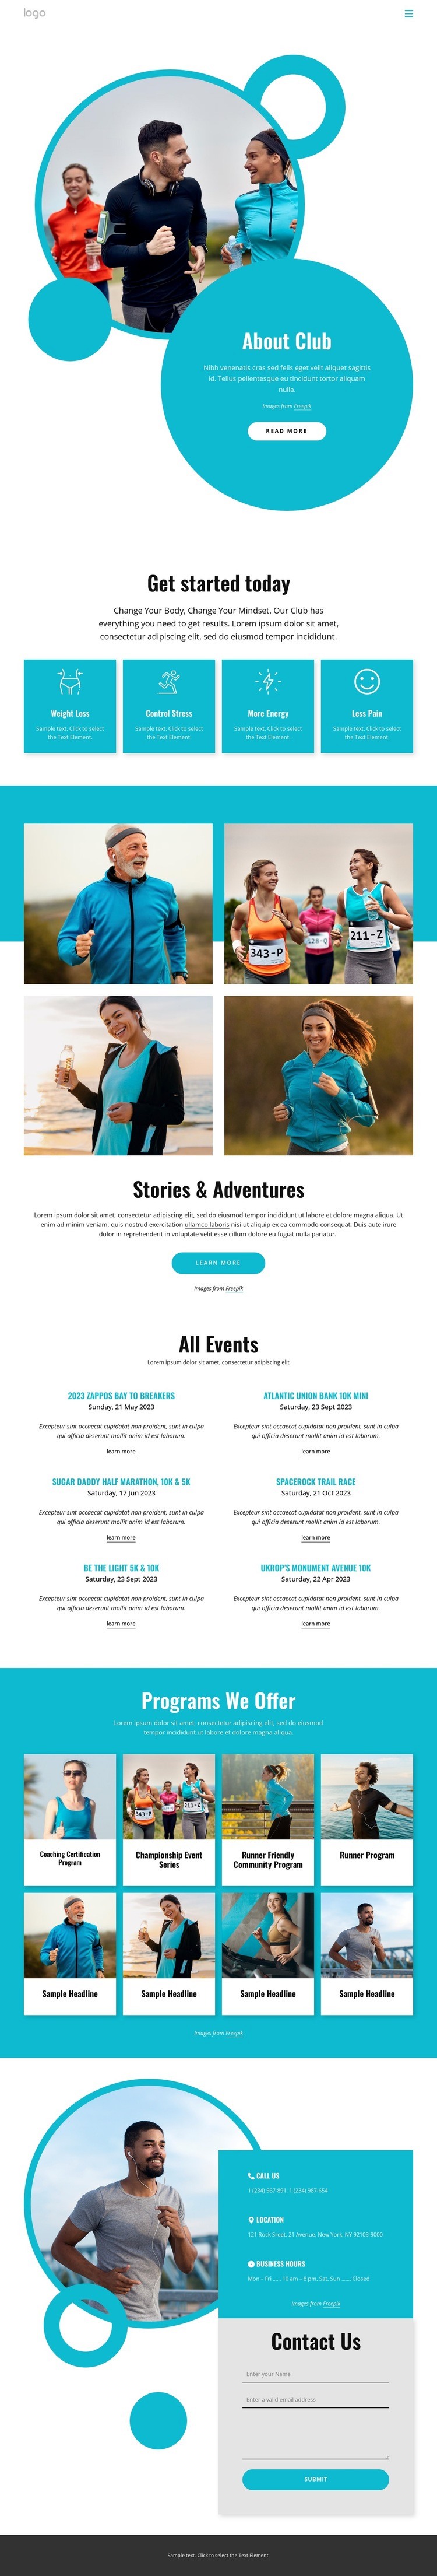 Running club activities Homepage Design